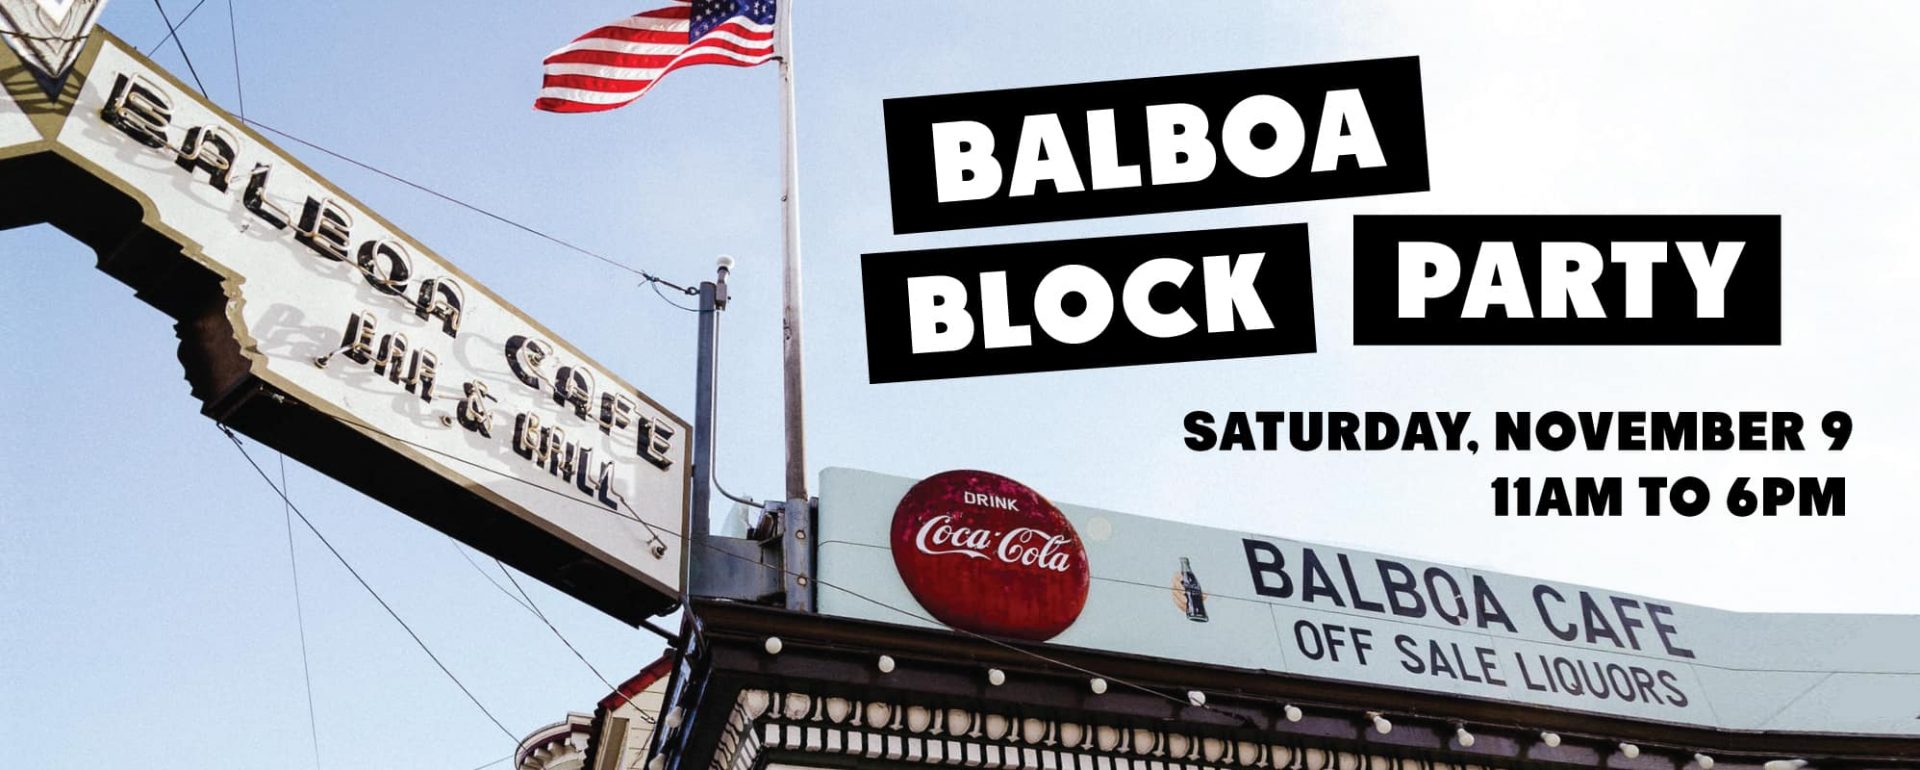 Balboa-Block-Party-San-Francisco